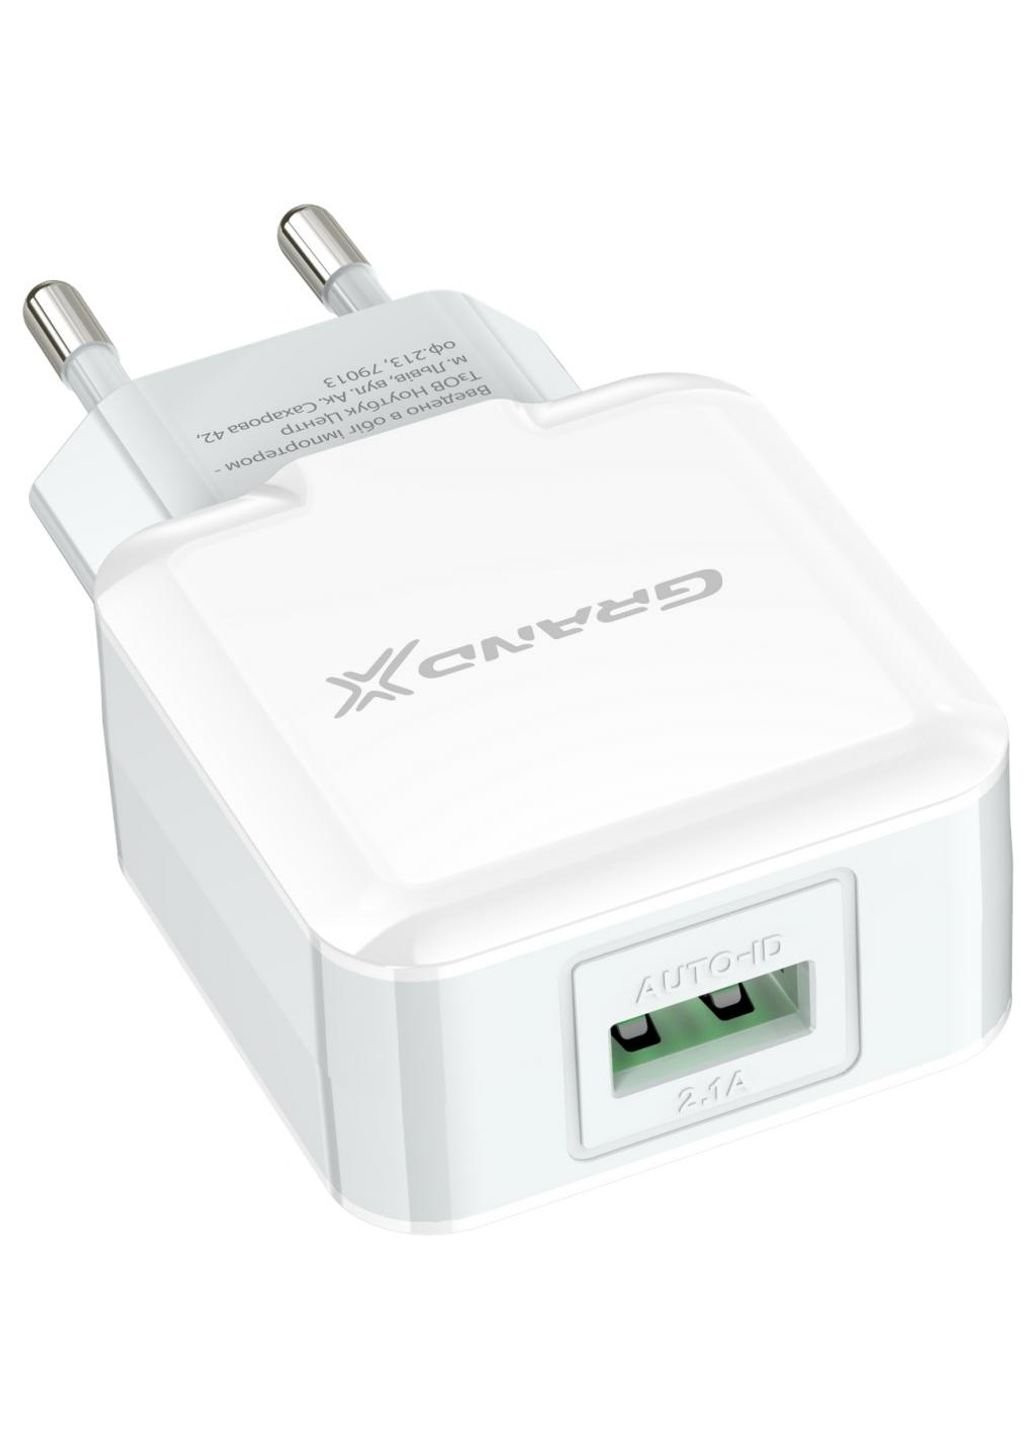 Зарядний пристрій (CH-03UMW) Grand-X usb 5v 2,1a white + cable usb -> micro usb, cu (253506924)